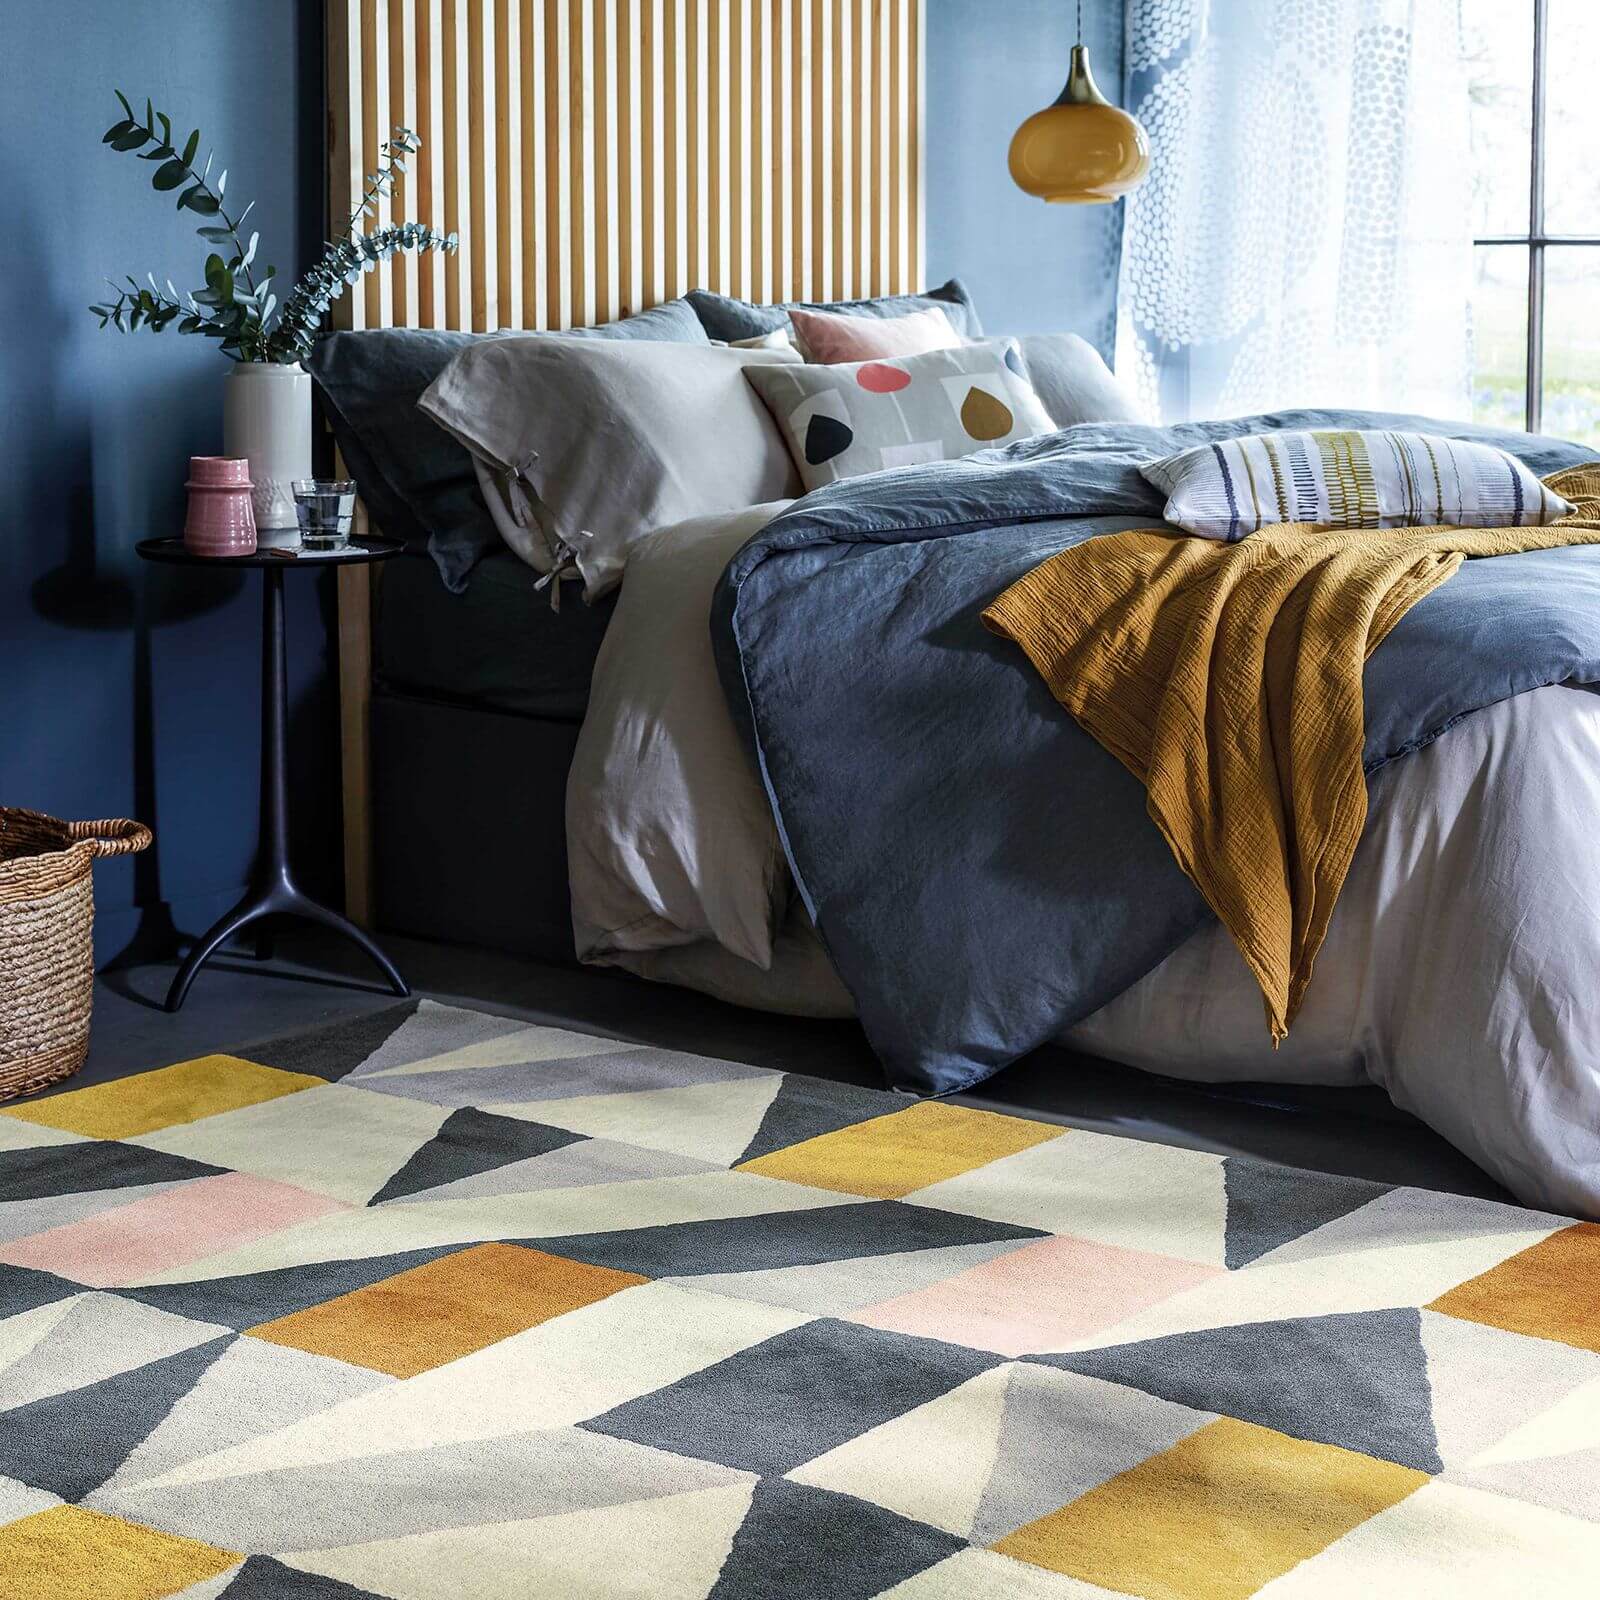 яркий ковер с геометрическим рисунком в спальне